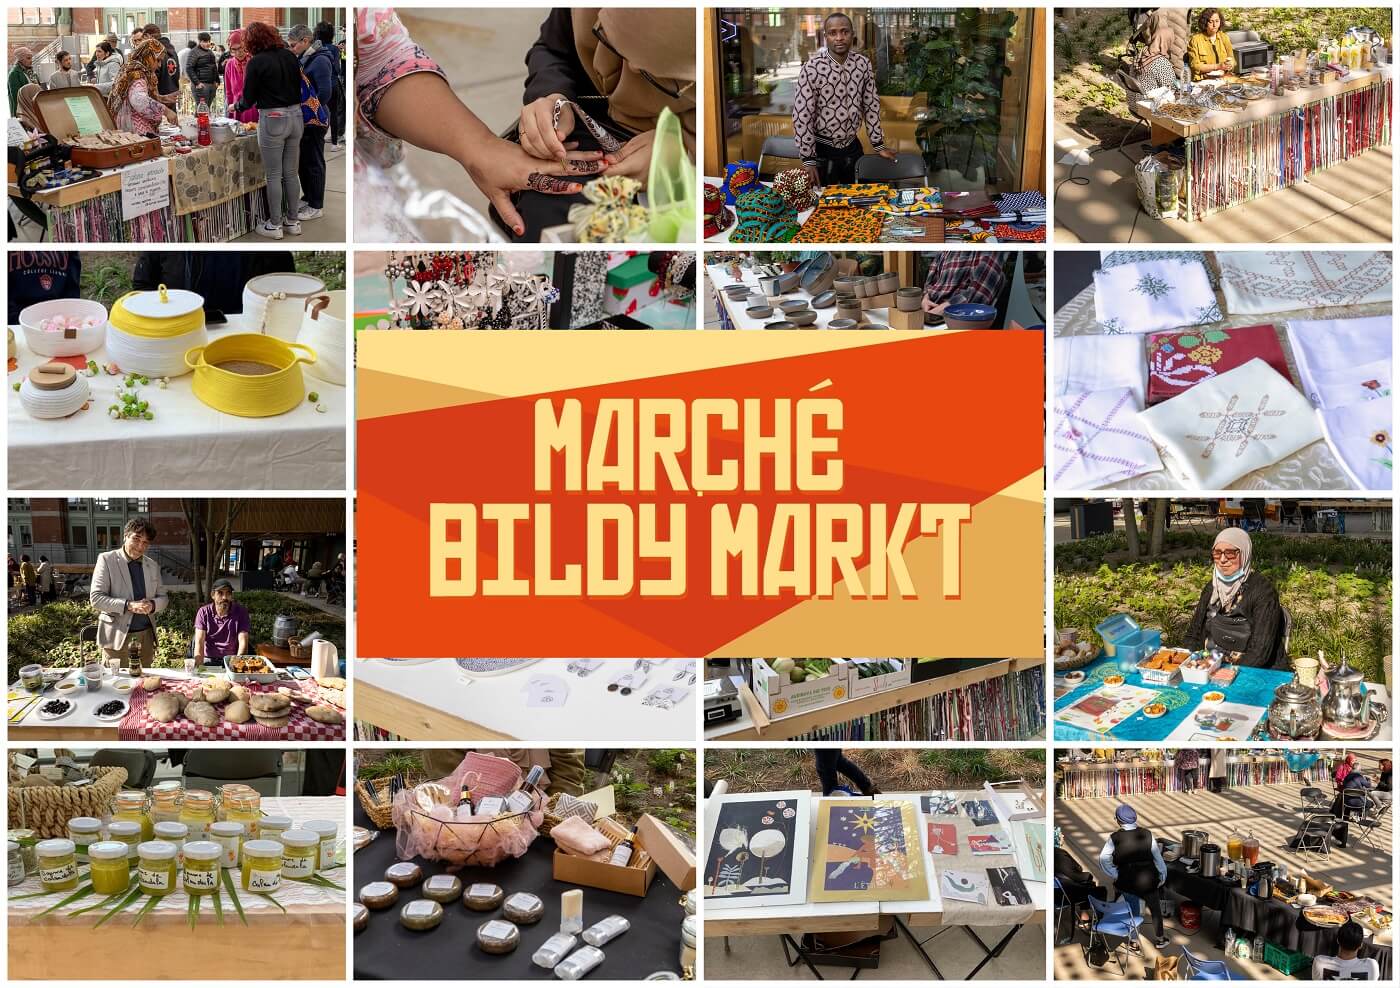 Marché Bildy Market